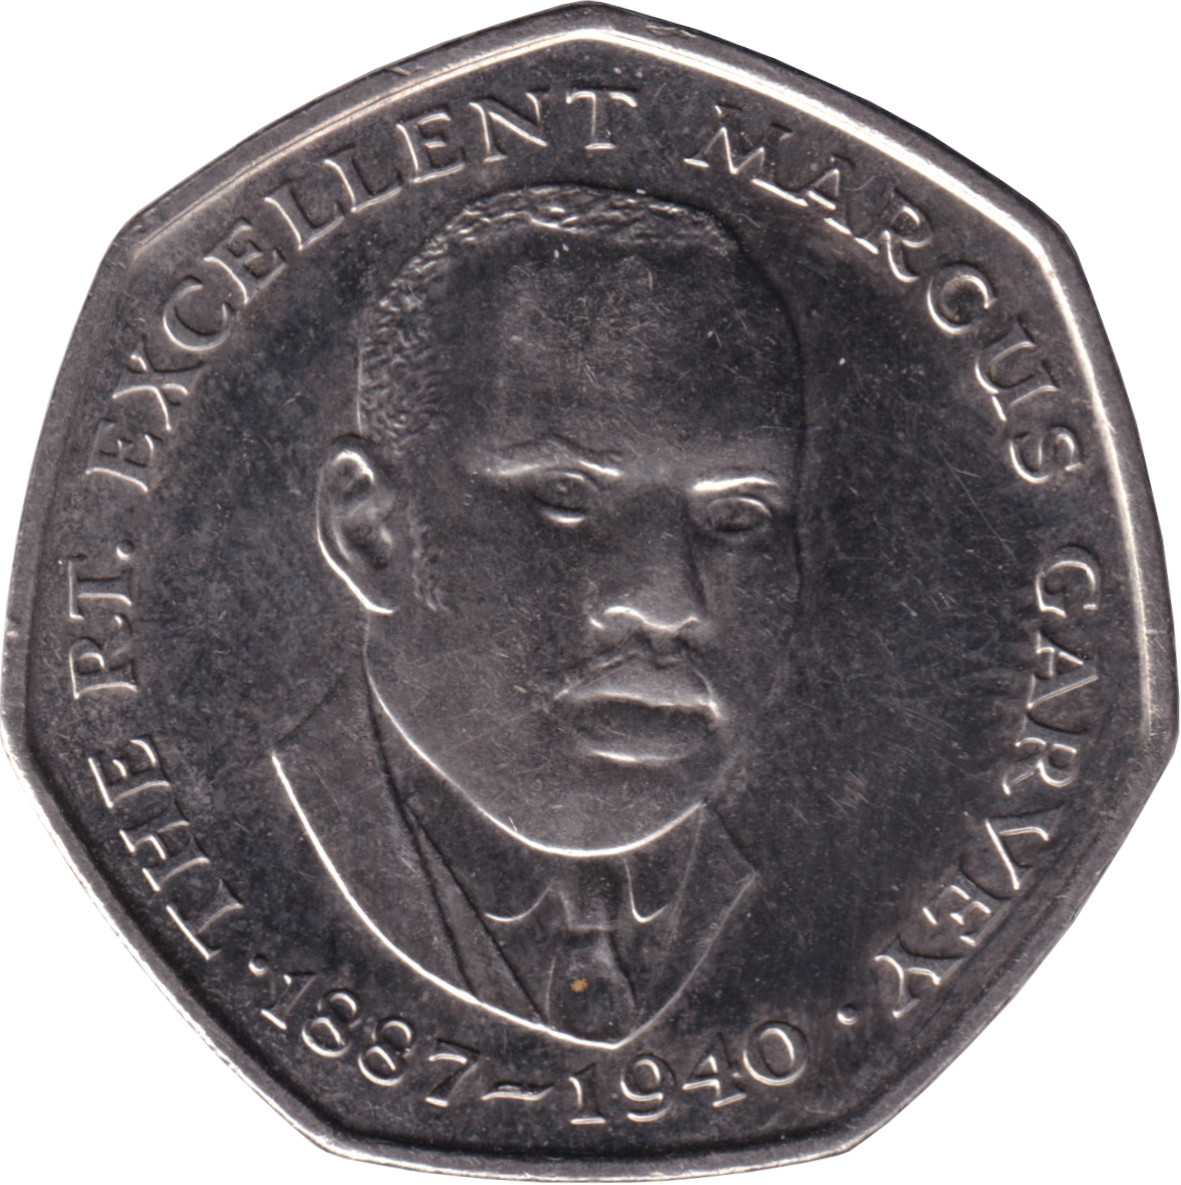 25 cents - Marcus Garvey - Largeste